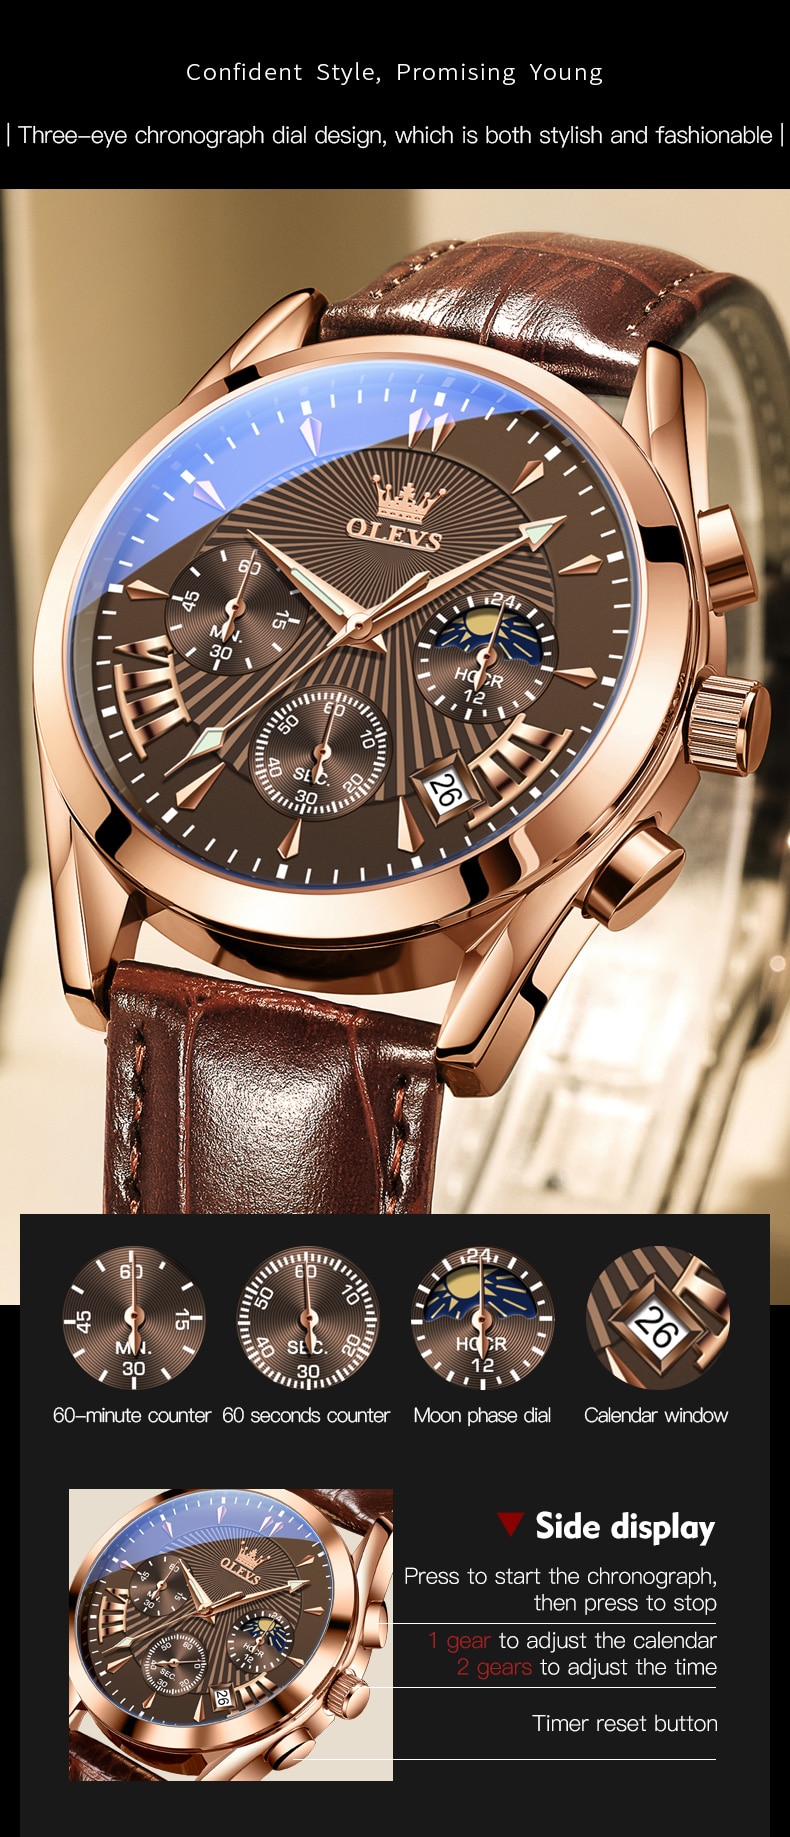 OLEVS 2876 Multifunctional Luxury Genuine Leather Strap Watches for Men Quartz Sport Waterproof Men Wristwatches Luminous